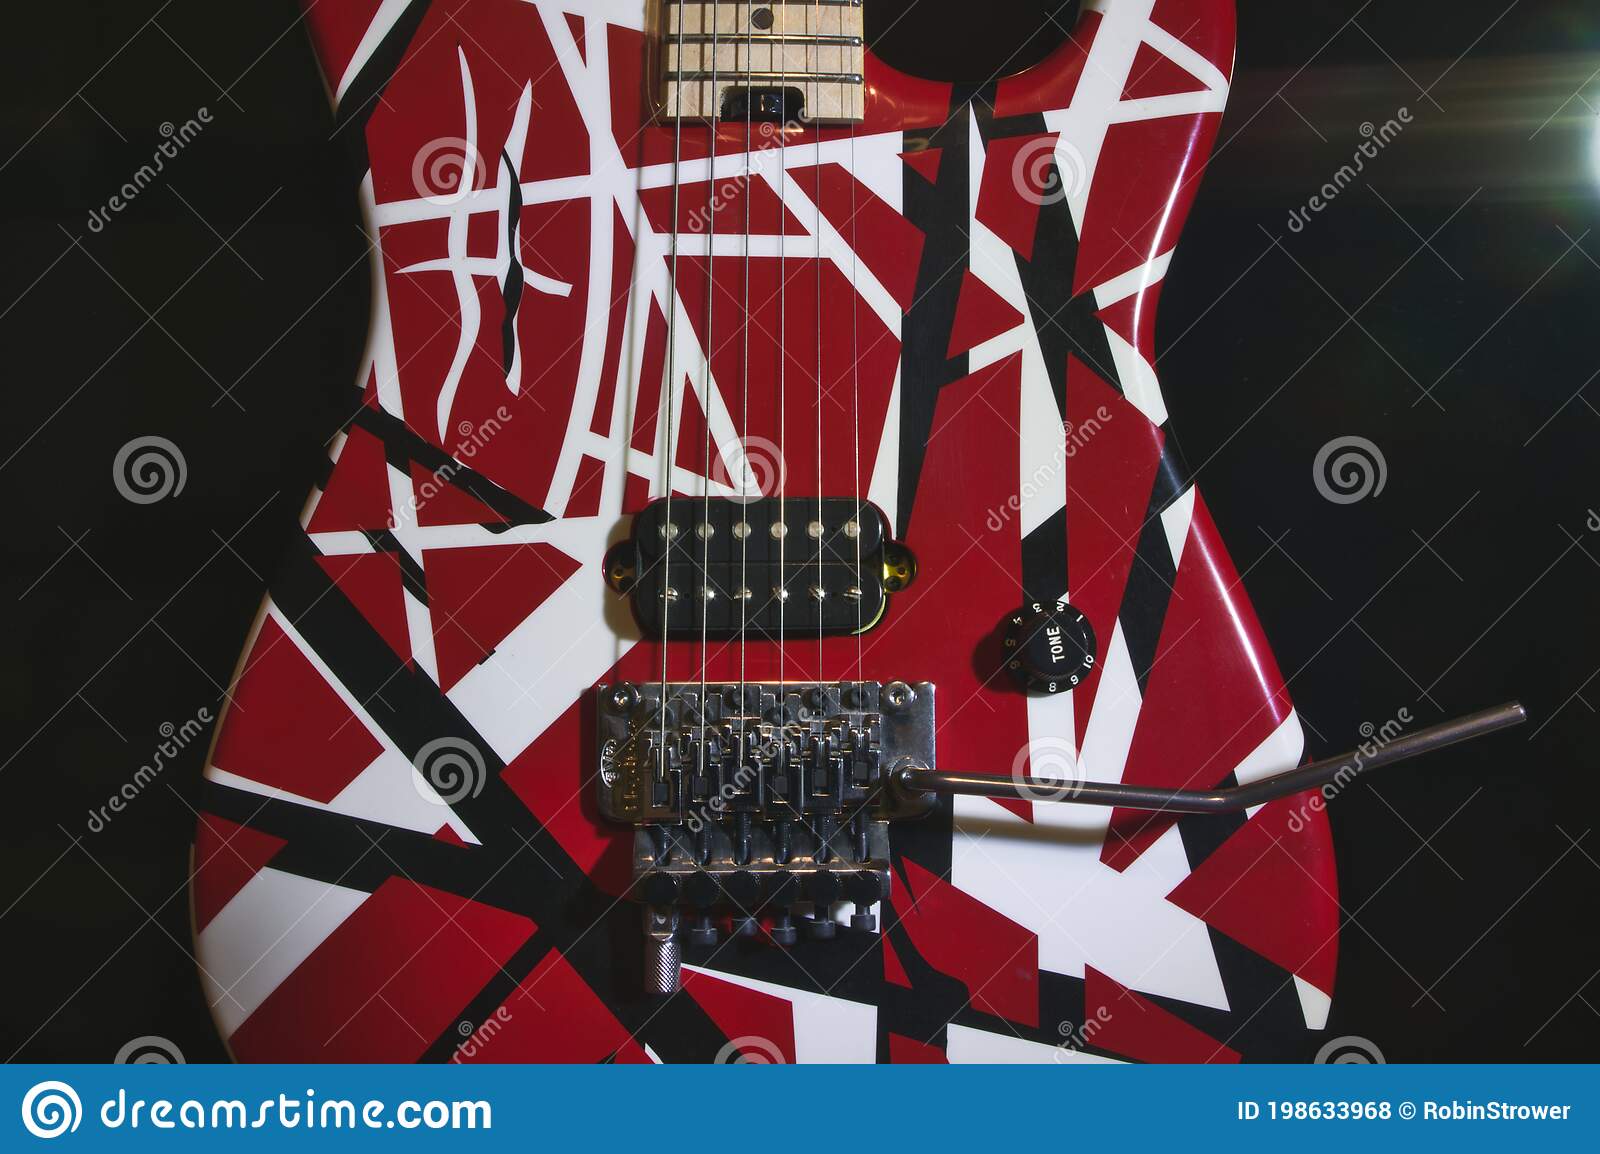 Eddie van halen evh striped red white black guitar body editorial stock photo